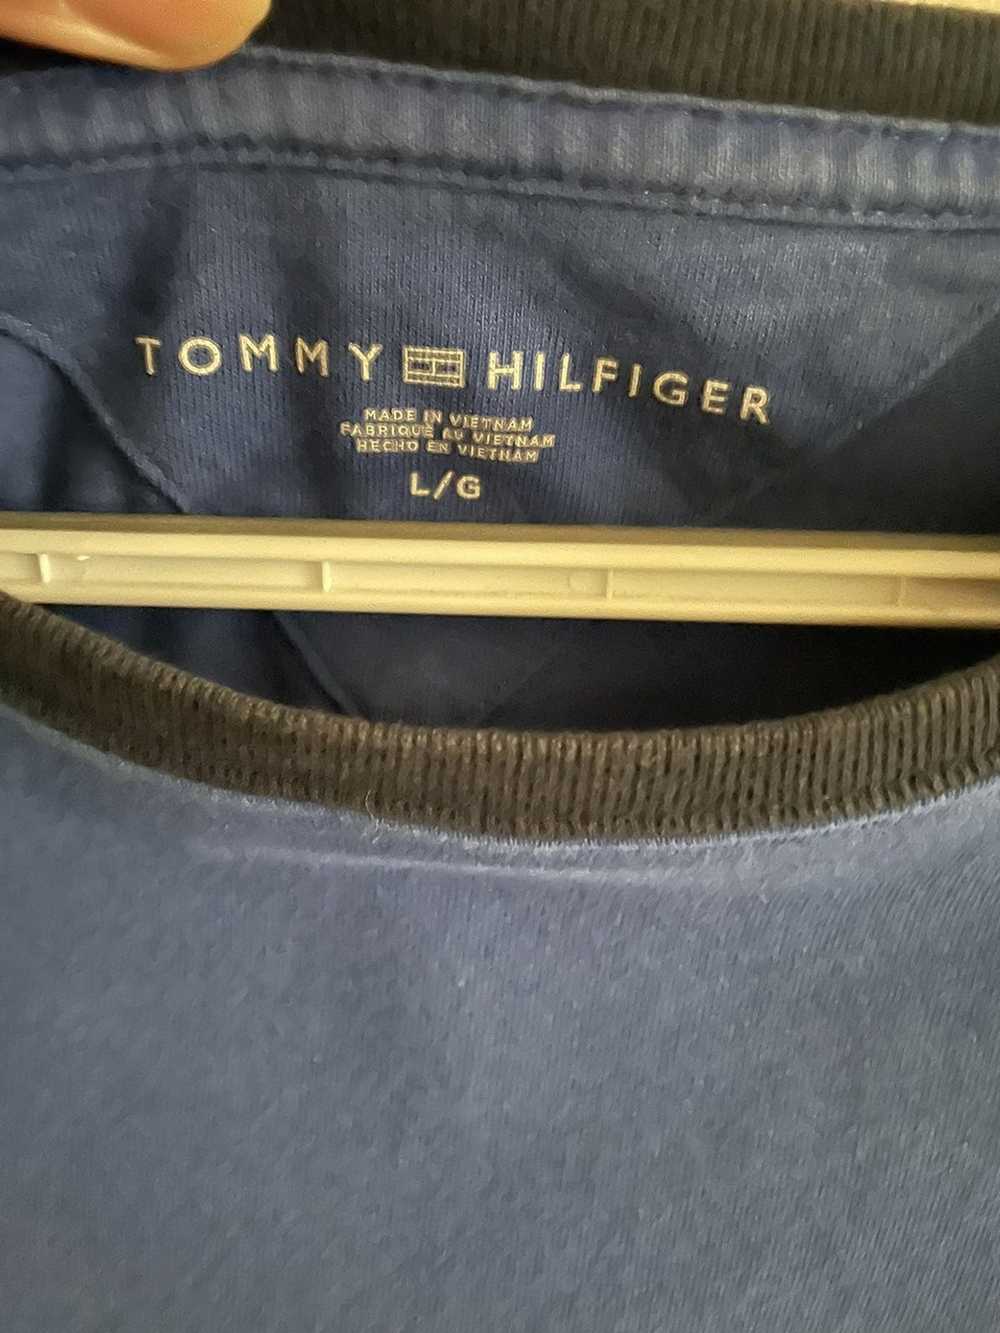 Tommy Hilfiger Tommy Hilfiger Signature Stripe Tee - image 2